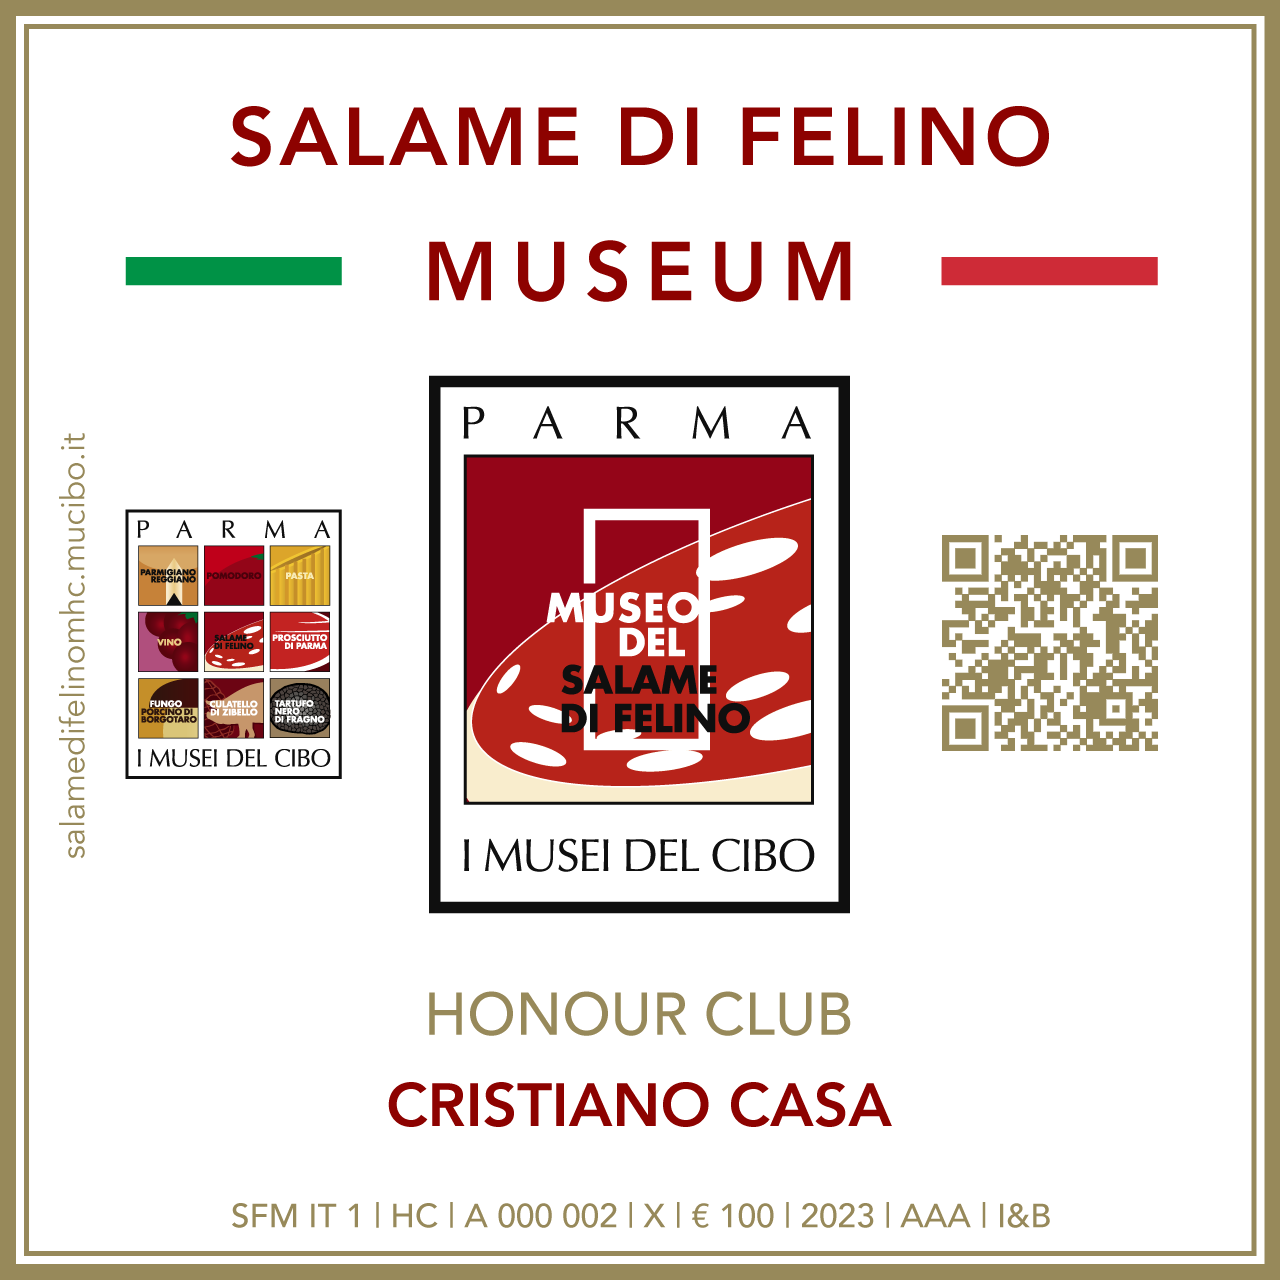 Salame di Felino Museum Honour Club - Token Id A 000 002 - CRISTIANO CASA